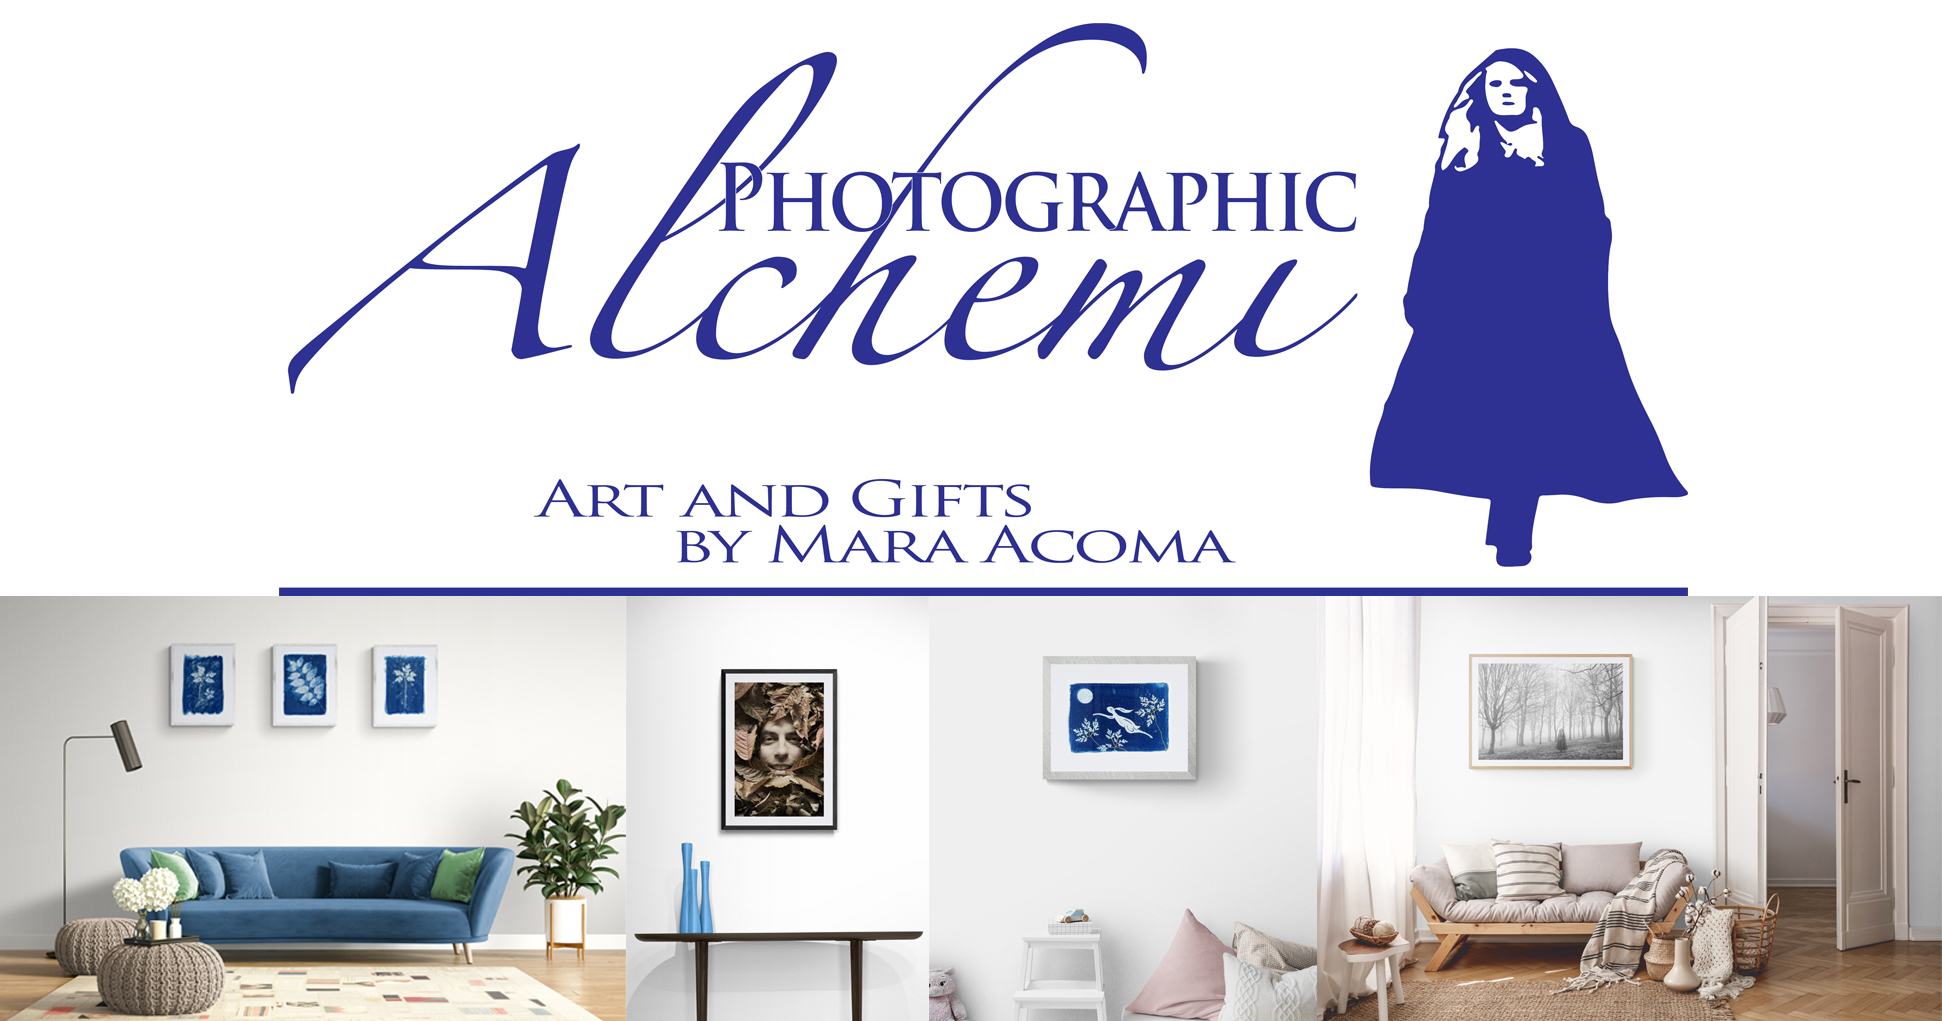 Photographic Alchemi